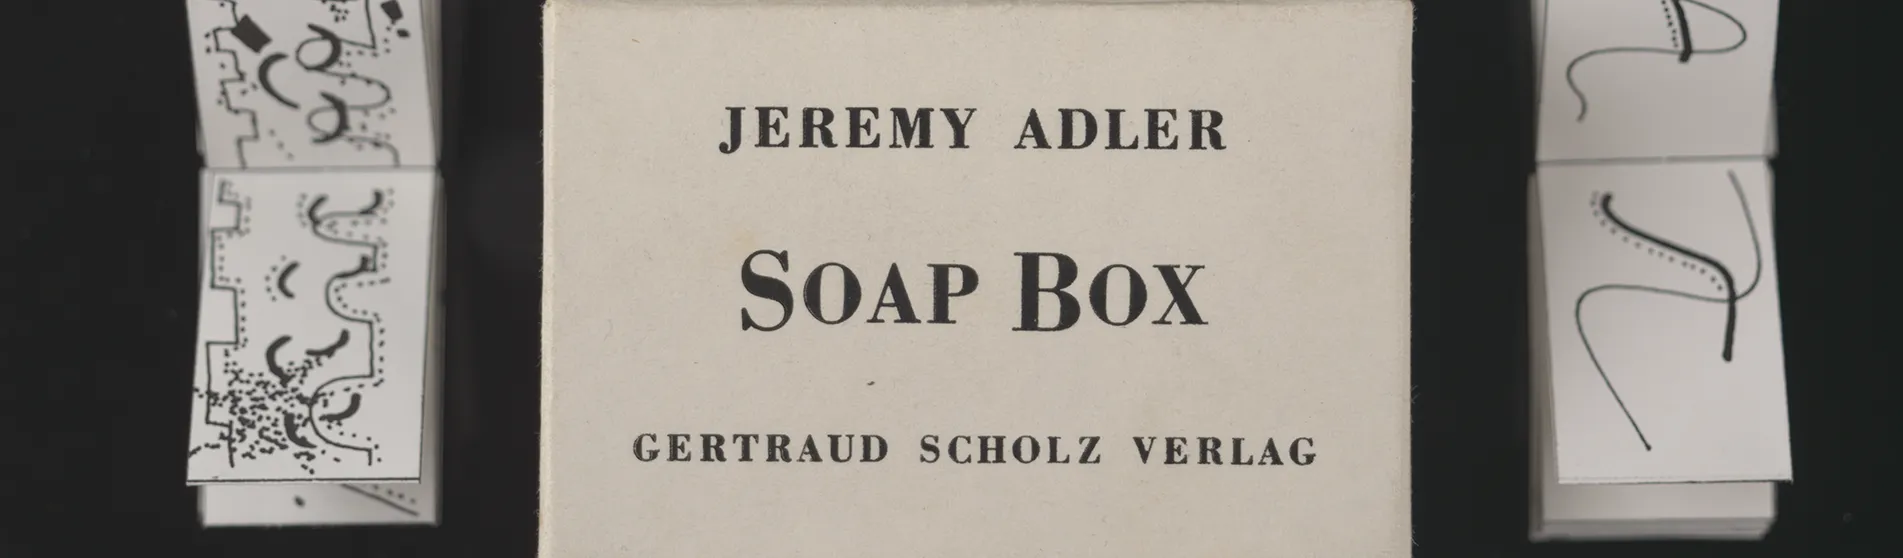 Concrete poetry artefacts, including a model soap box